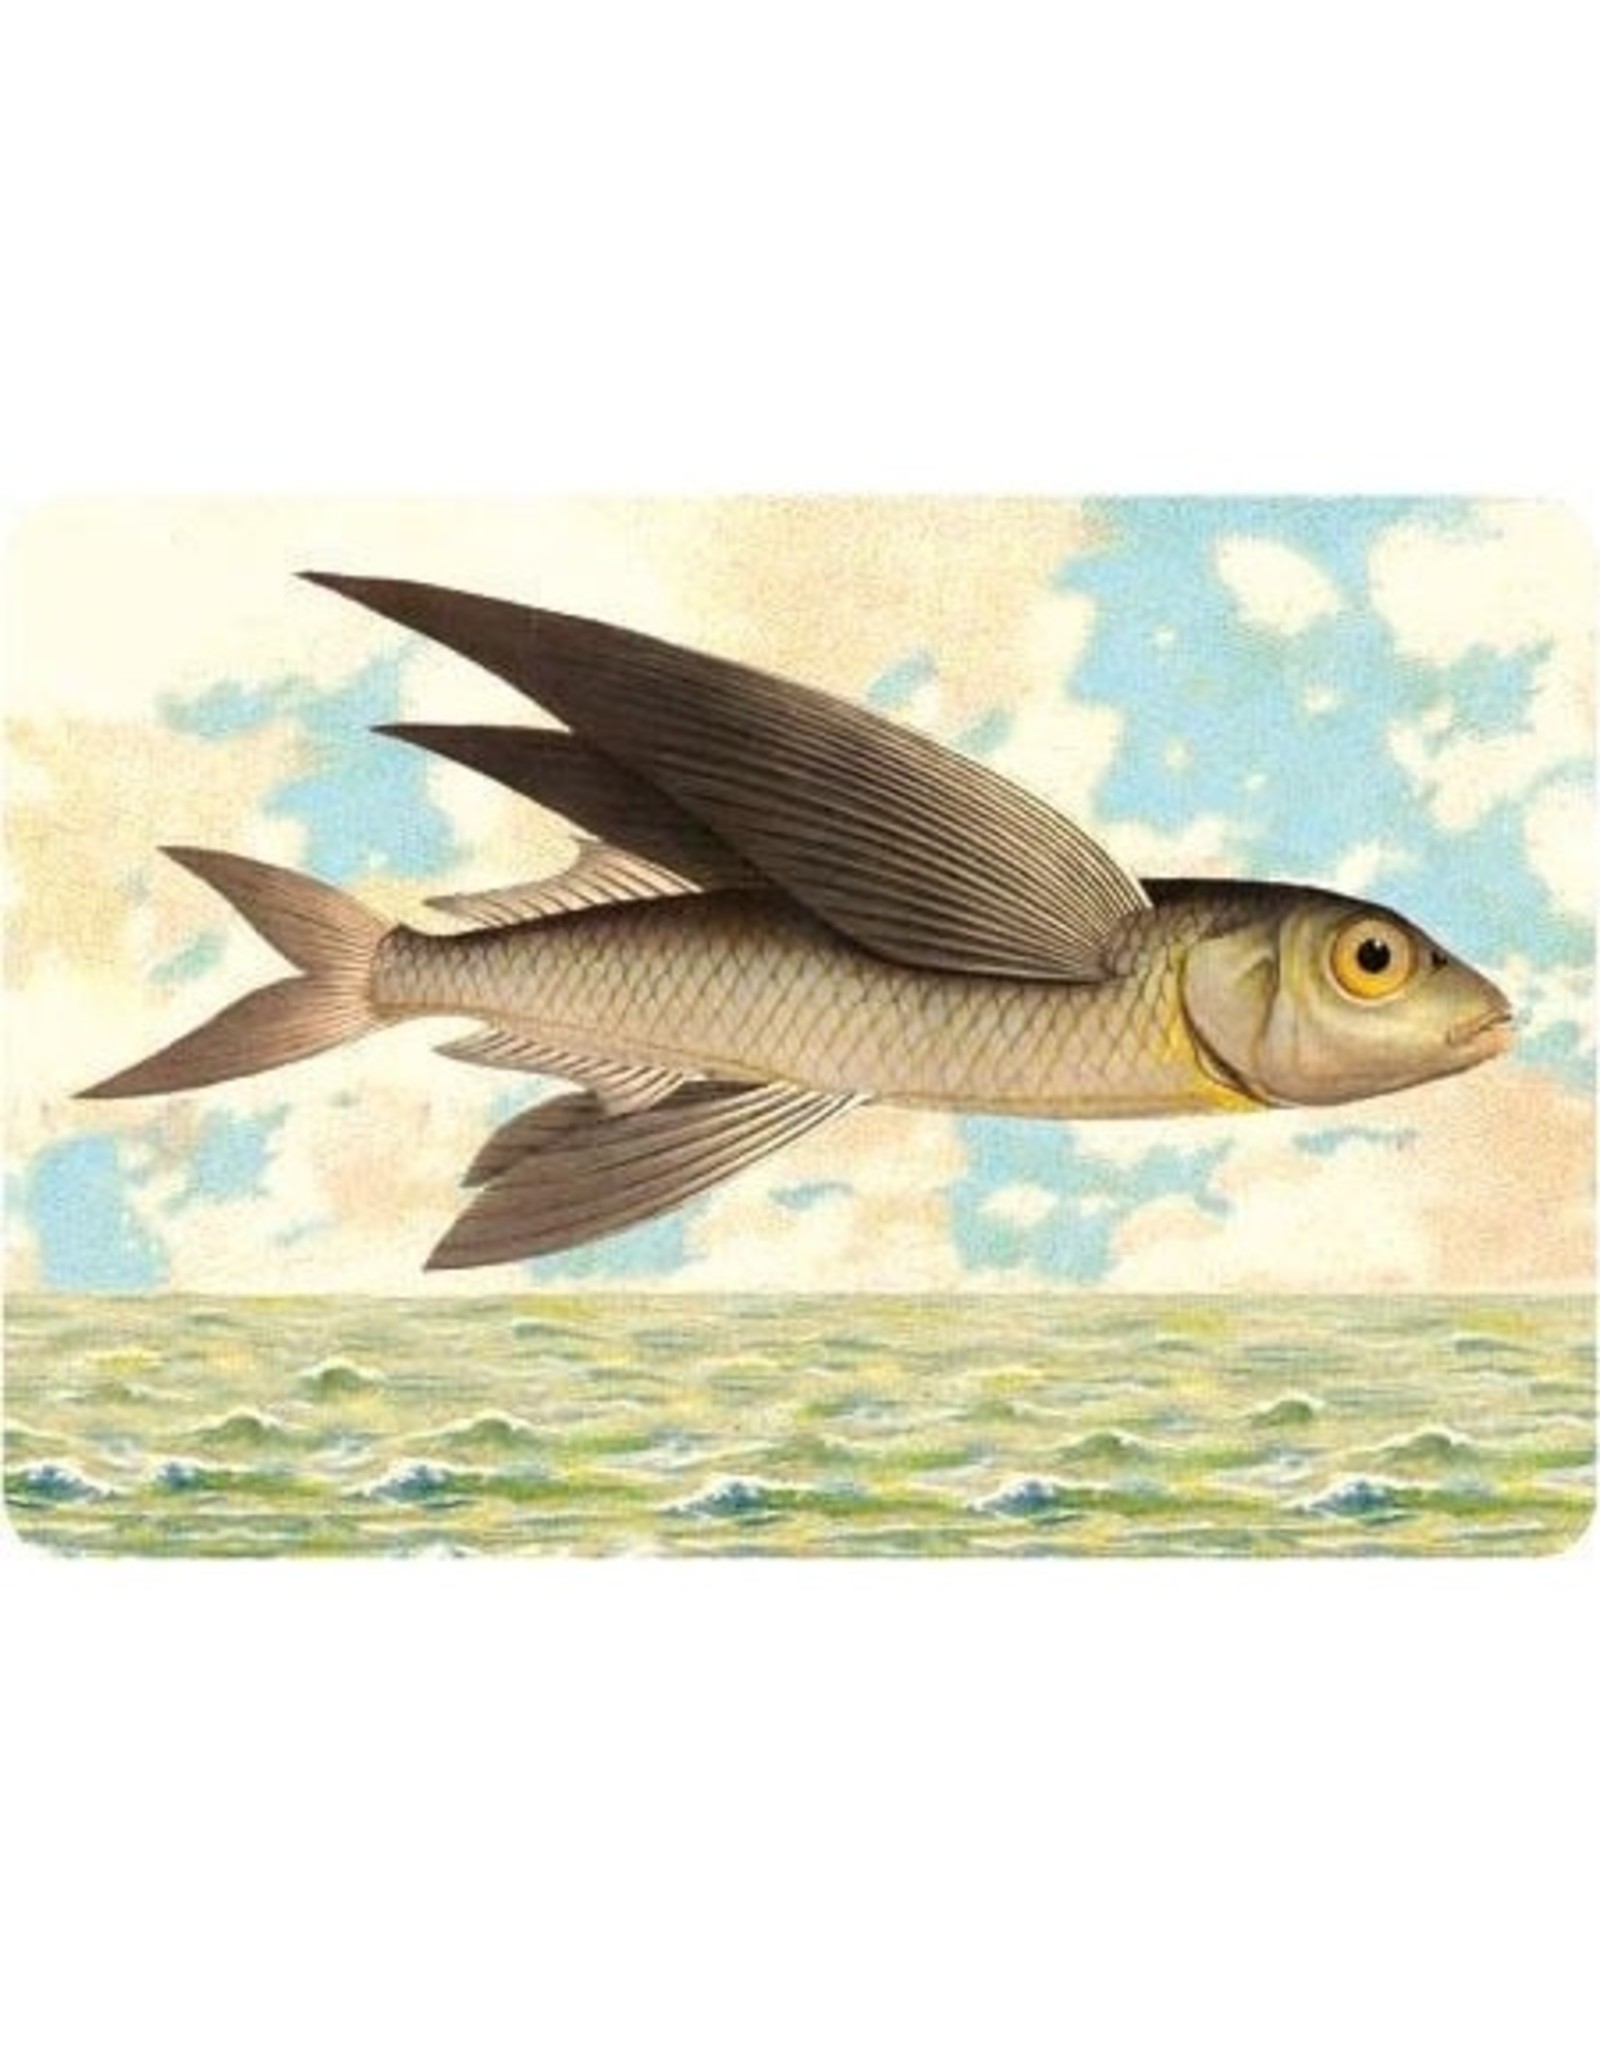 Seaside Flying Fish Postcard - Copperfield's Gifts & Rarities